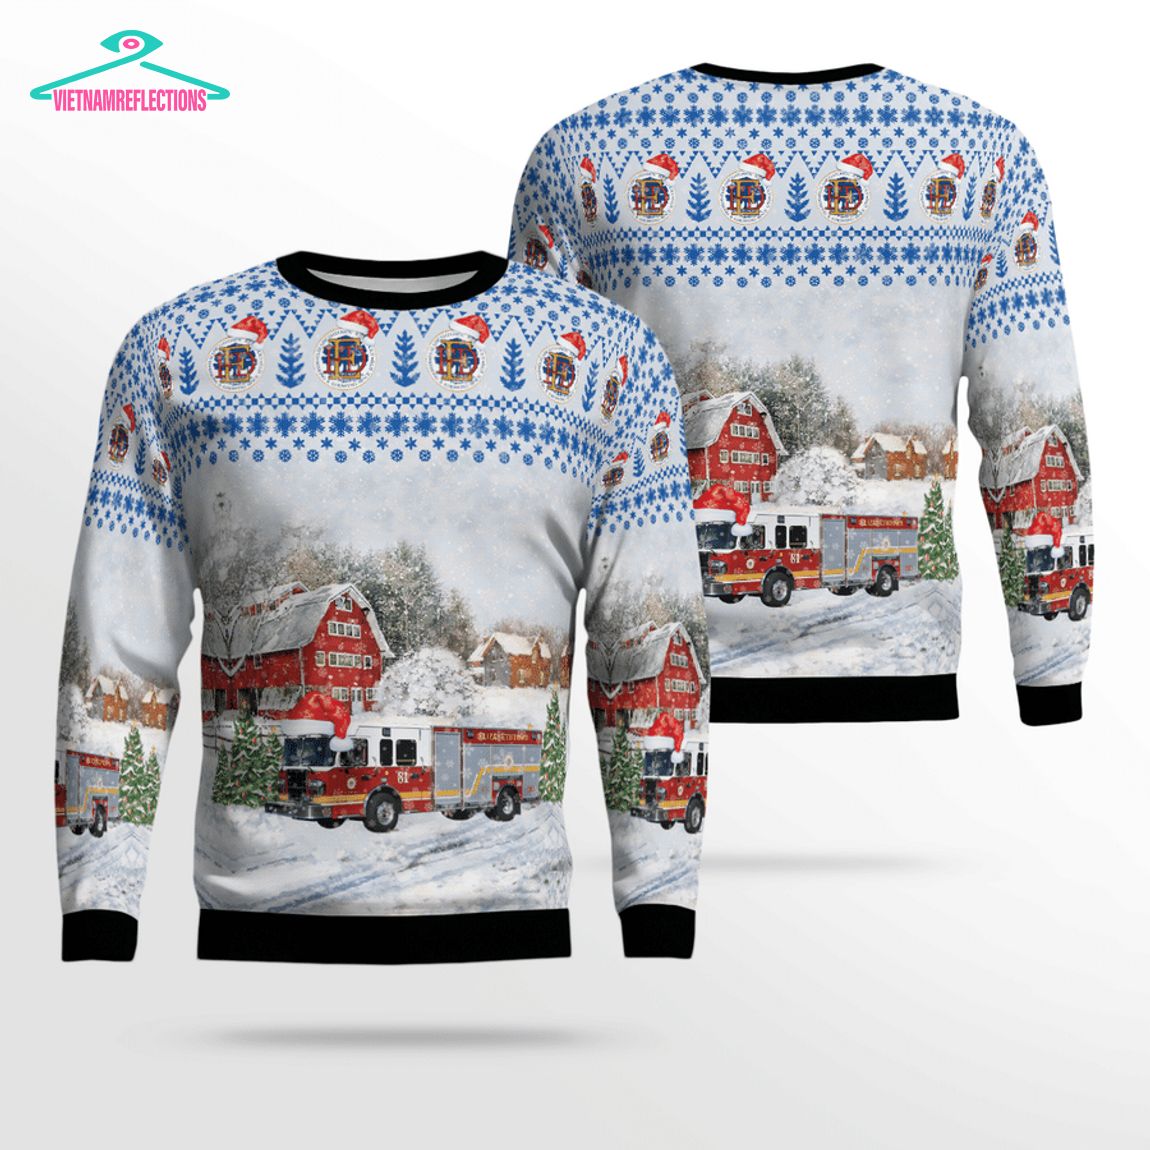 Elizabethtown Fire Department Ver 2 3D Christmas Sweater - Elegant picture.